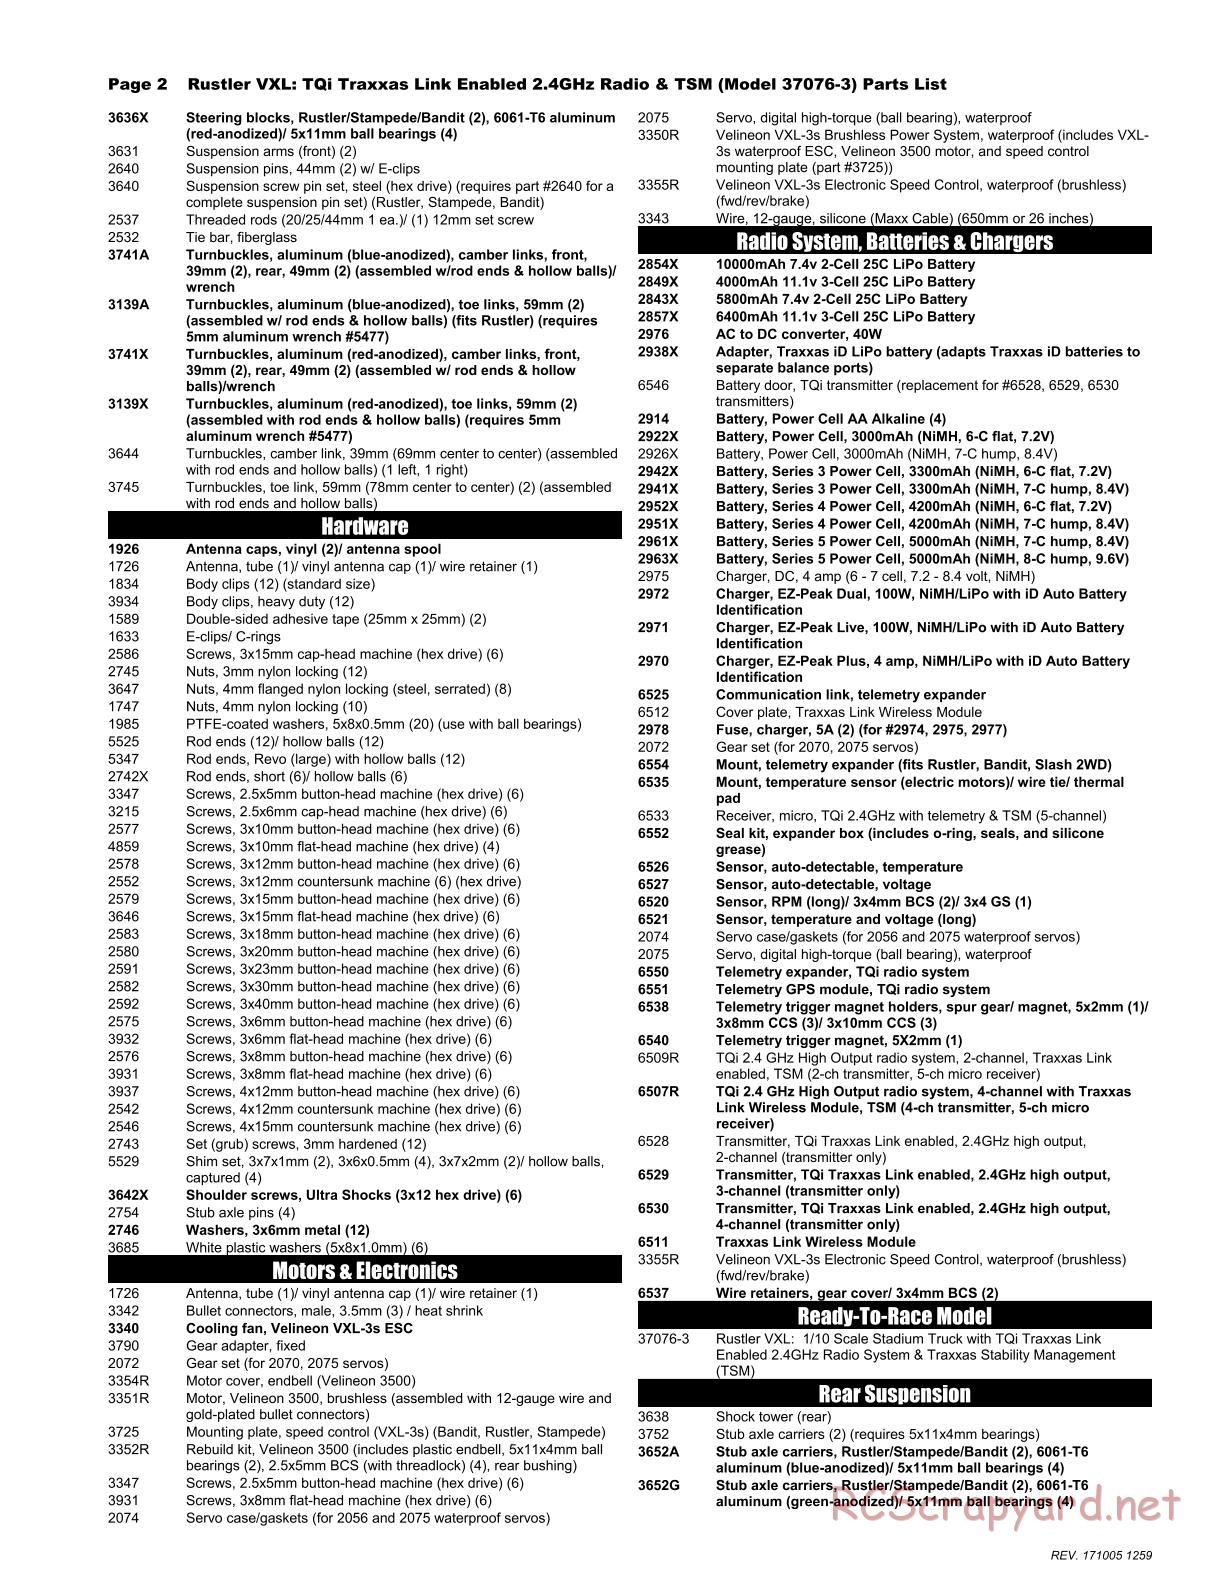 Traxxas - Rustler VXL TSM (2015) - Parts List - Page 2